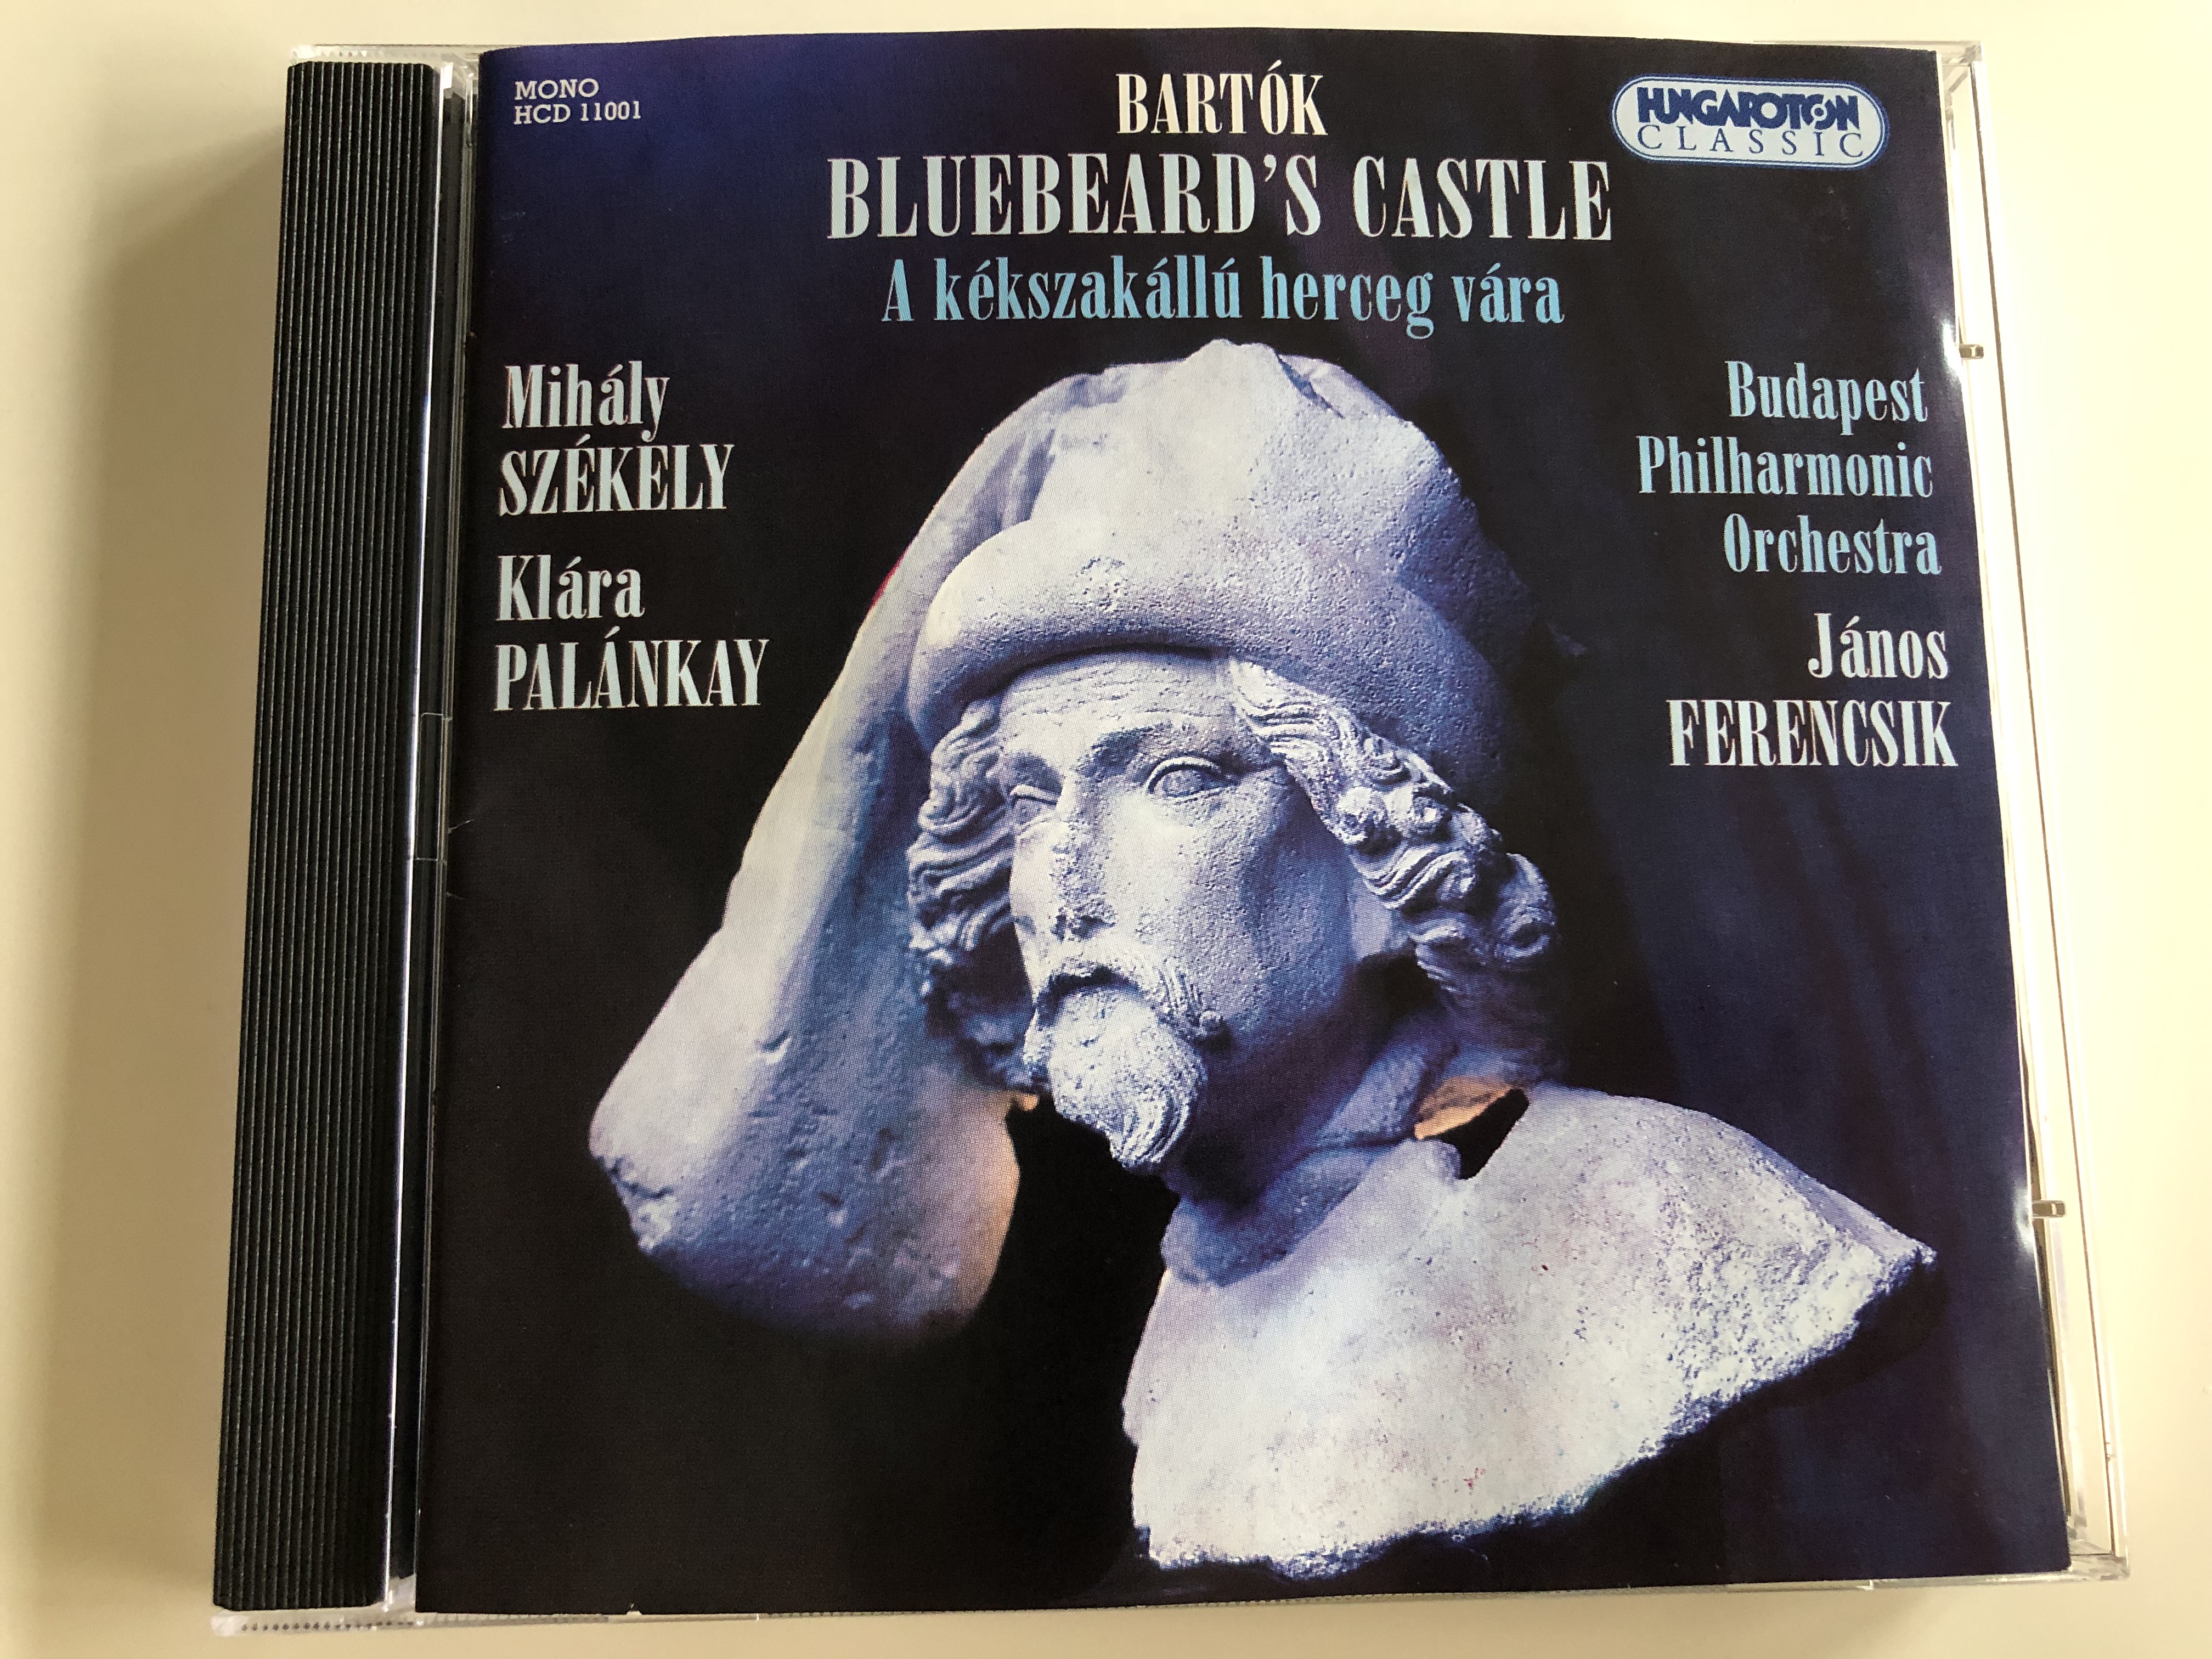 bart-k-bluebeard-s-castle-a-k-kszak-ll-herceg-v-ra-audio-cd-1994-budapest-philharmonic-orchestra-conducted-by-j-nos-ferencsik-mih-ly-sz-kely-kl-ra-pal-nkay-hungaroton-classic-hcd-11001-1-.jpg